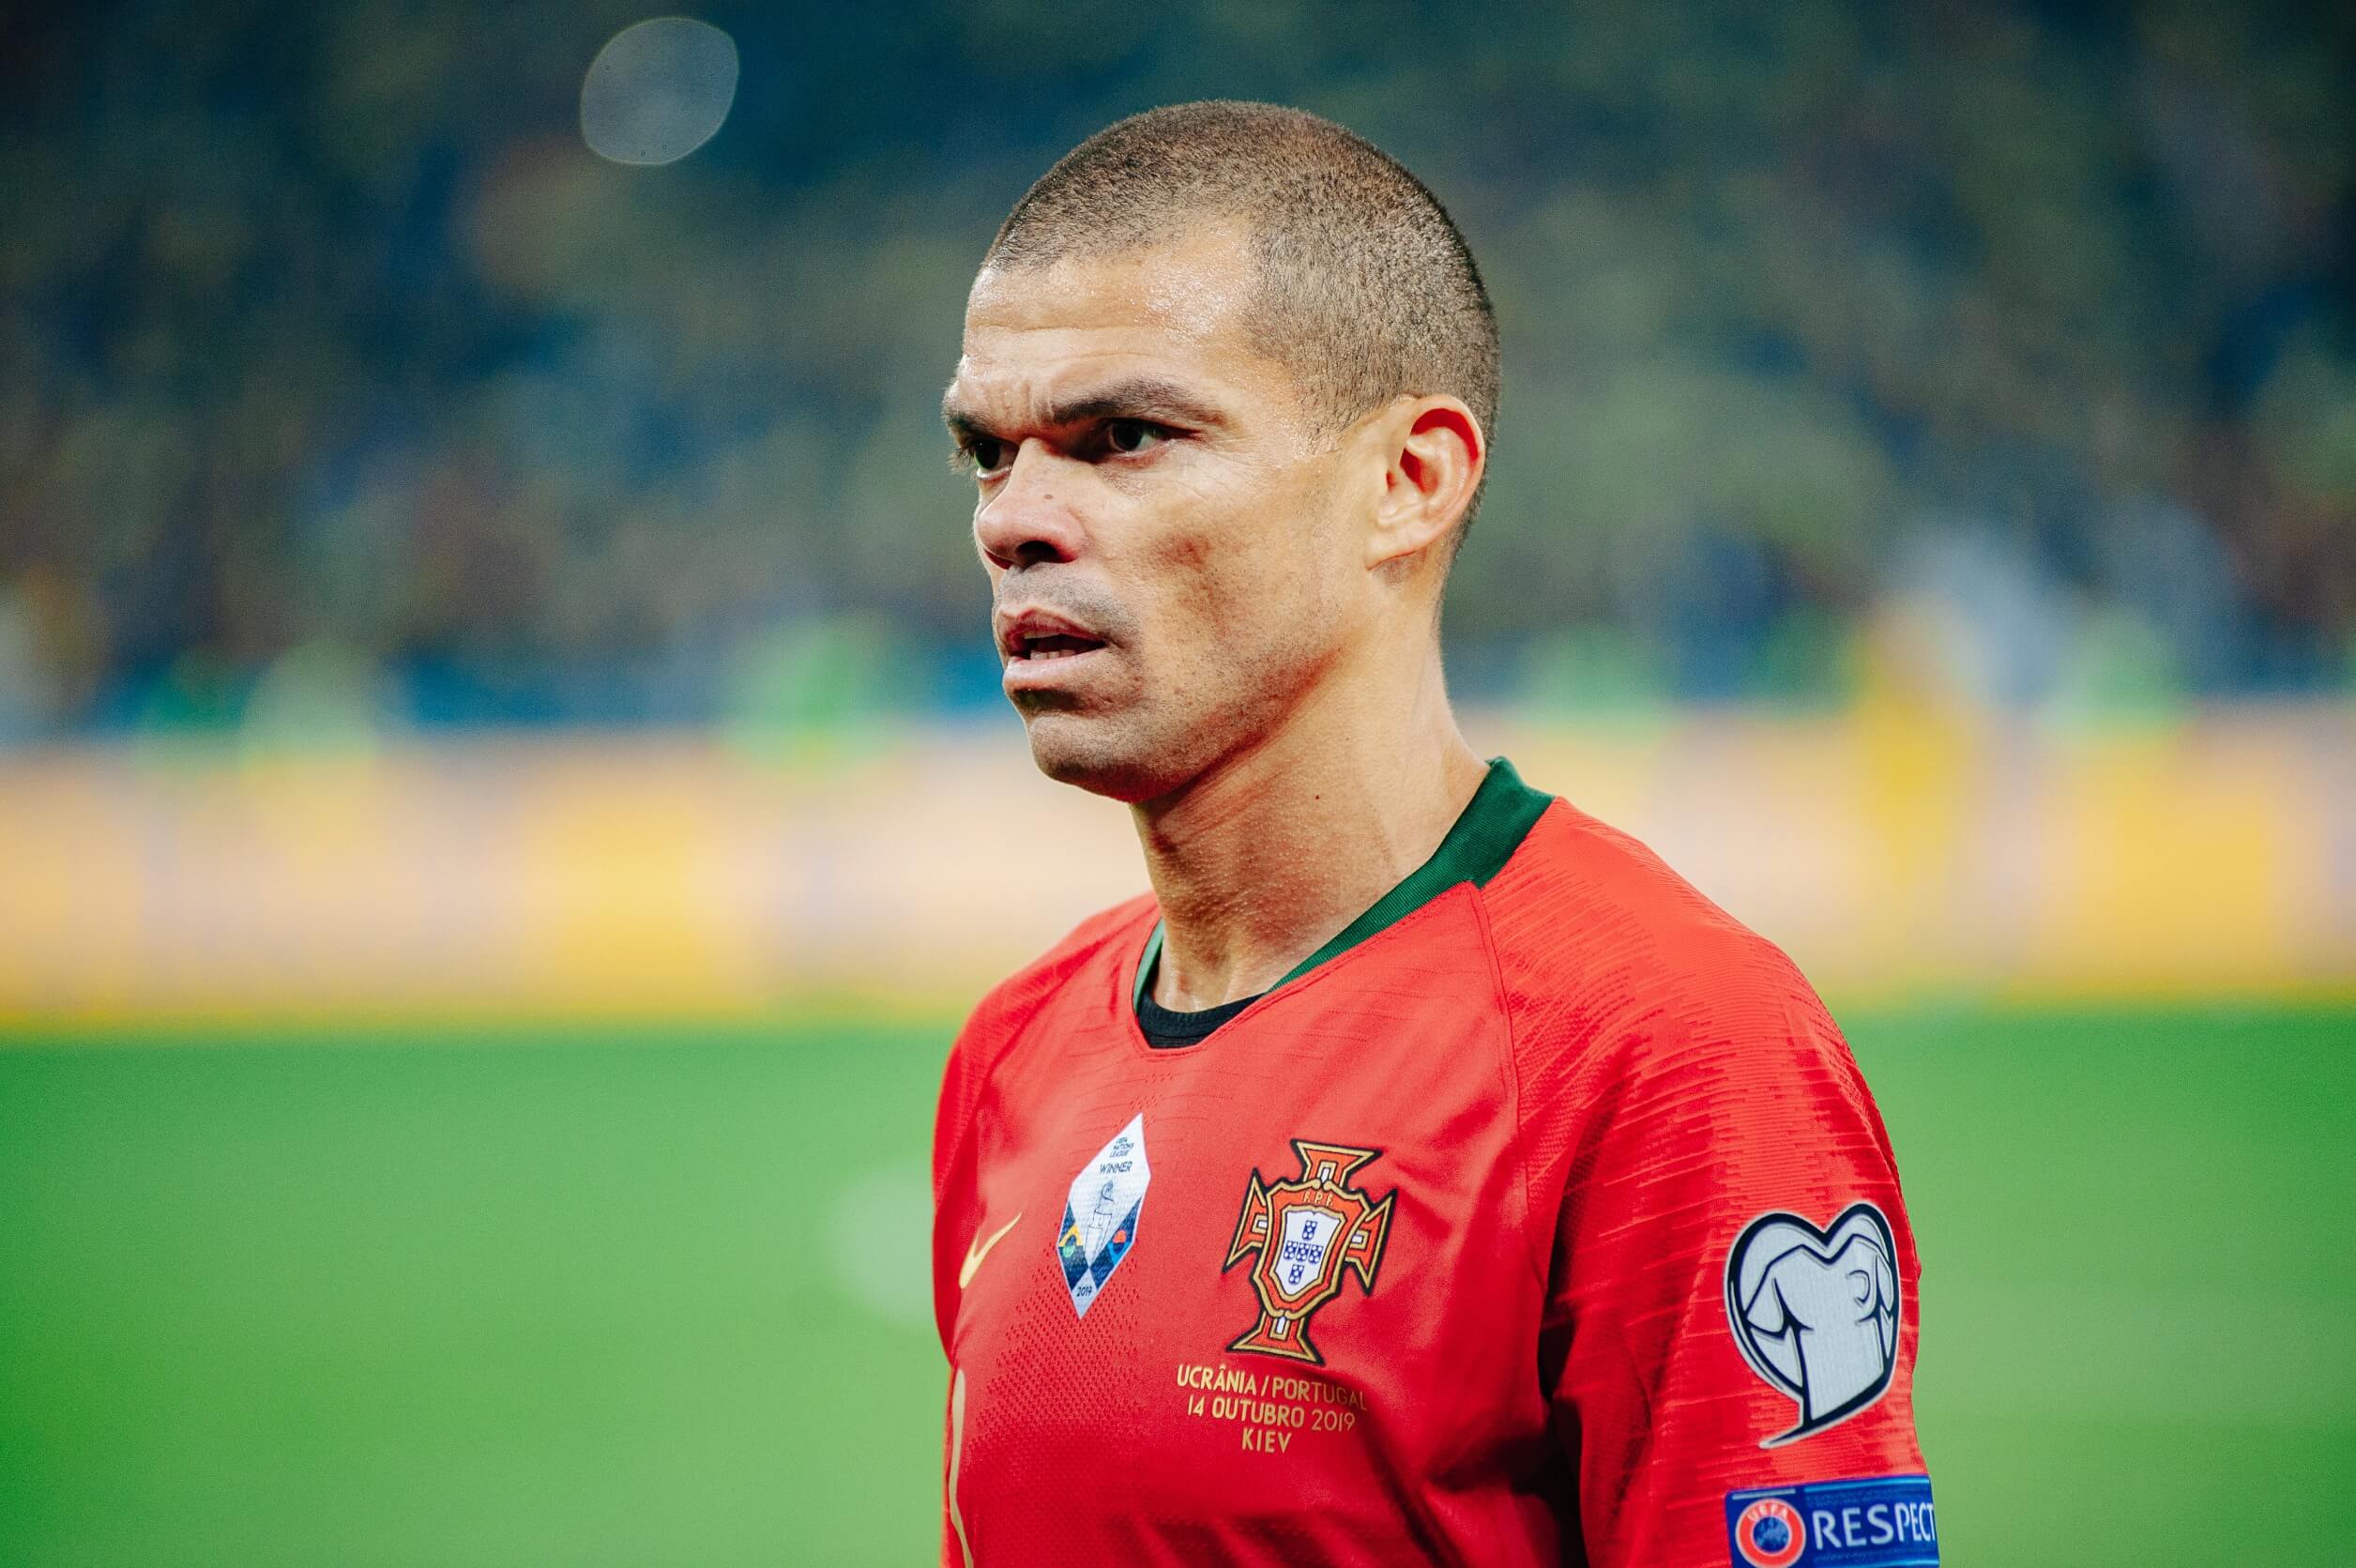 Soccer player Pepe.